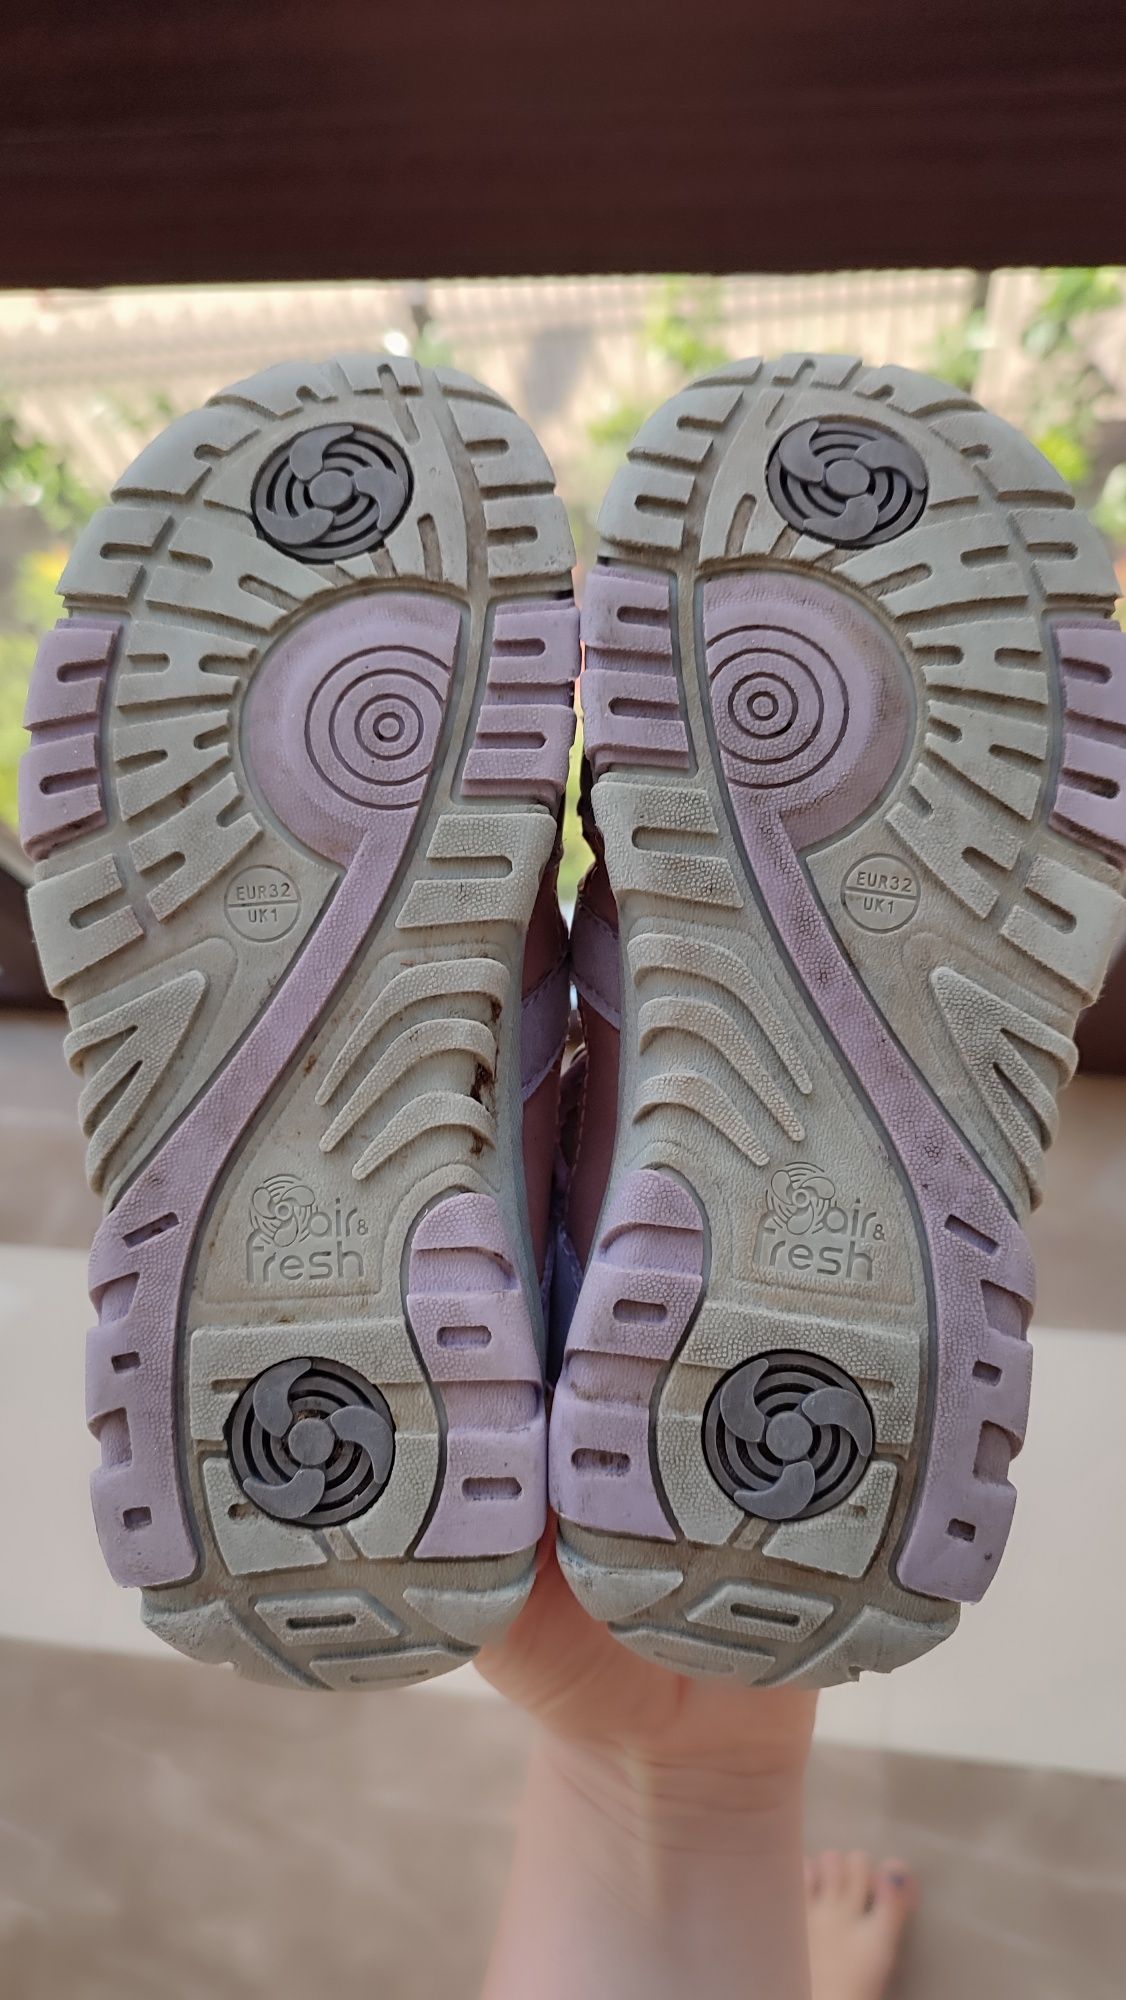 Sandale copii Air fresh Nr 32